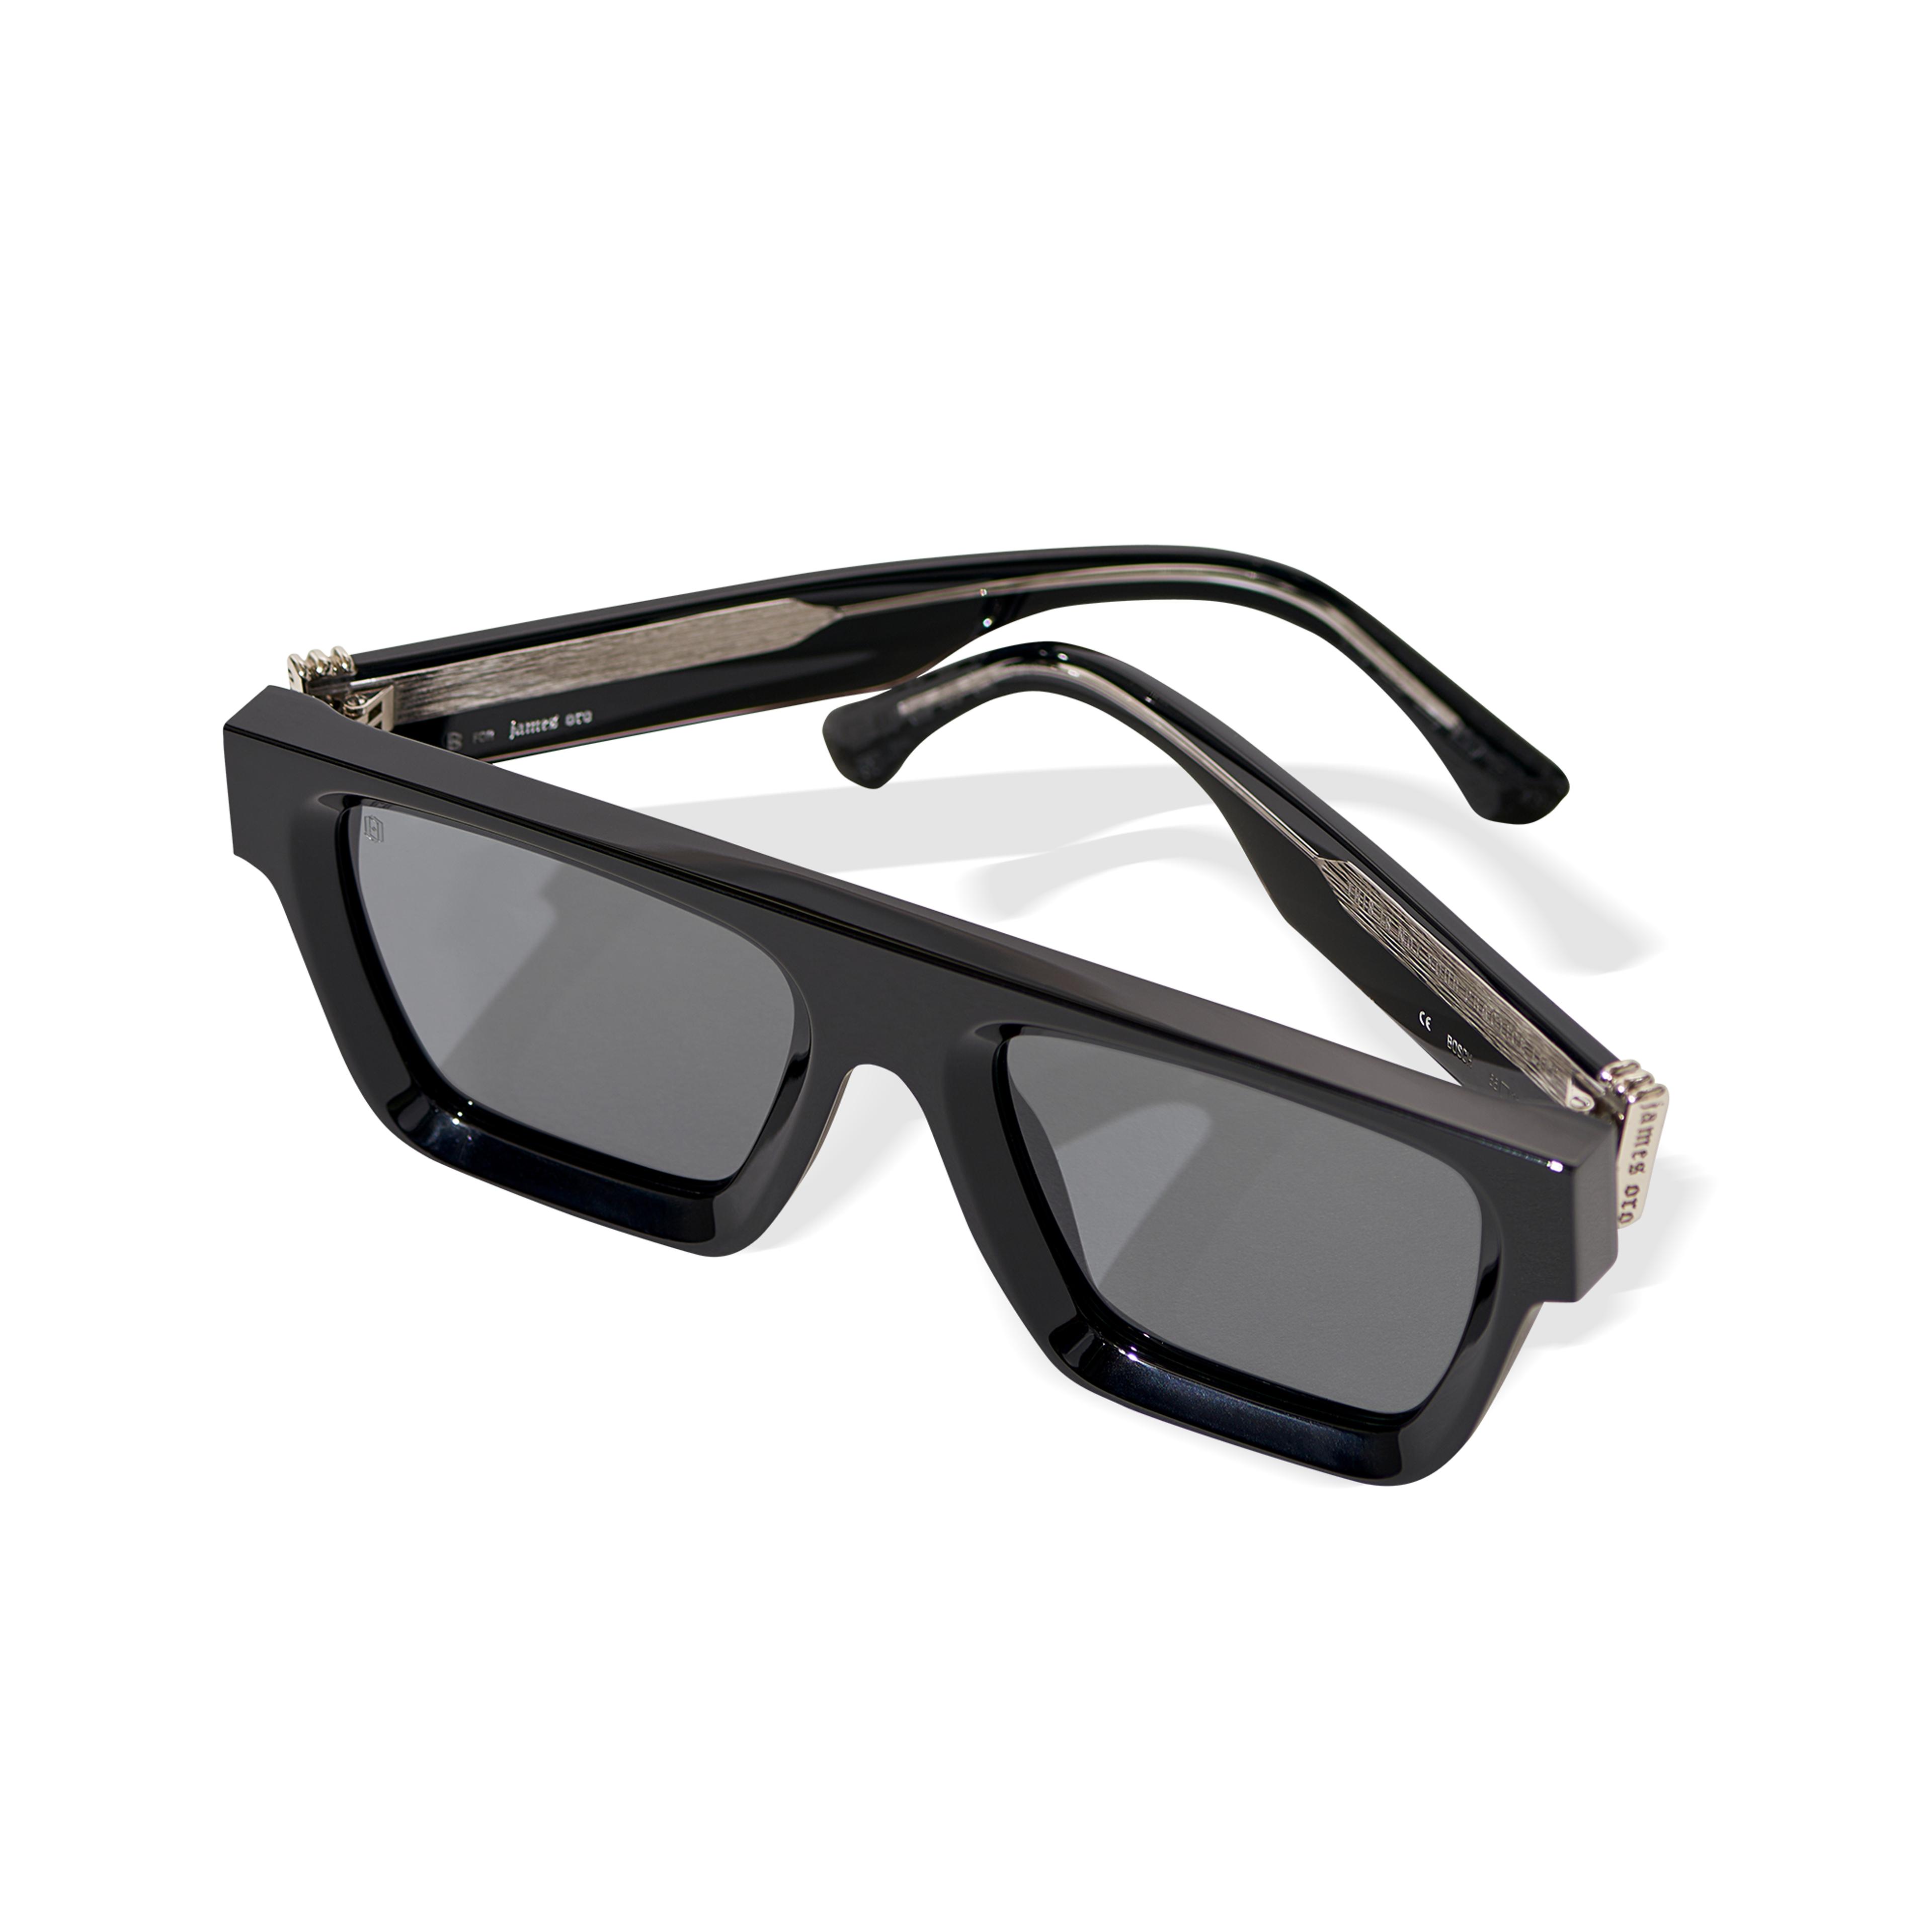 Alternate View 2 of Ben Baller x James Oro Sunglasses: Black Bosch